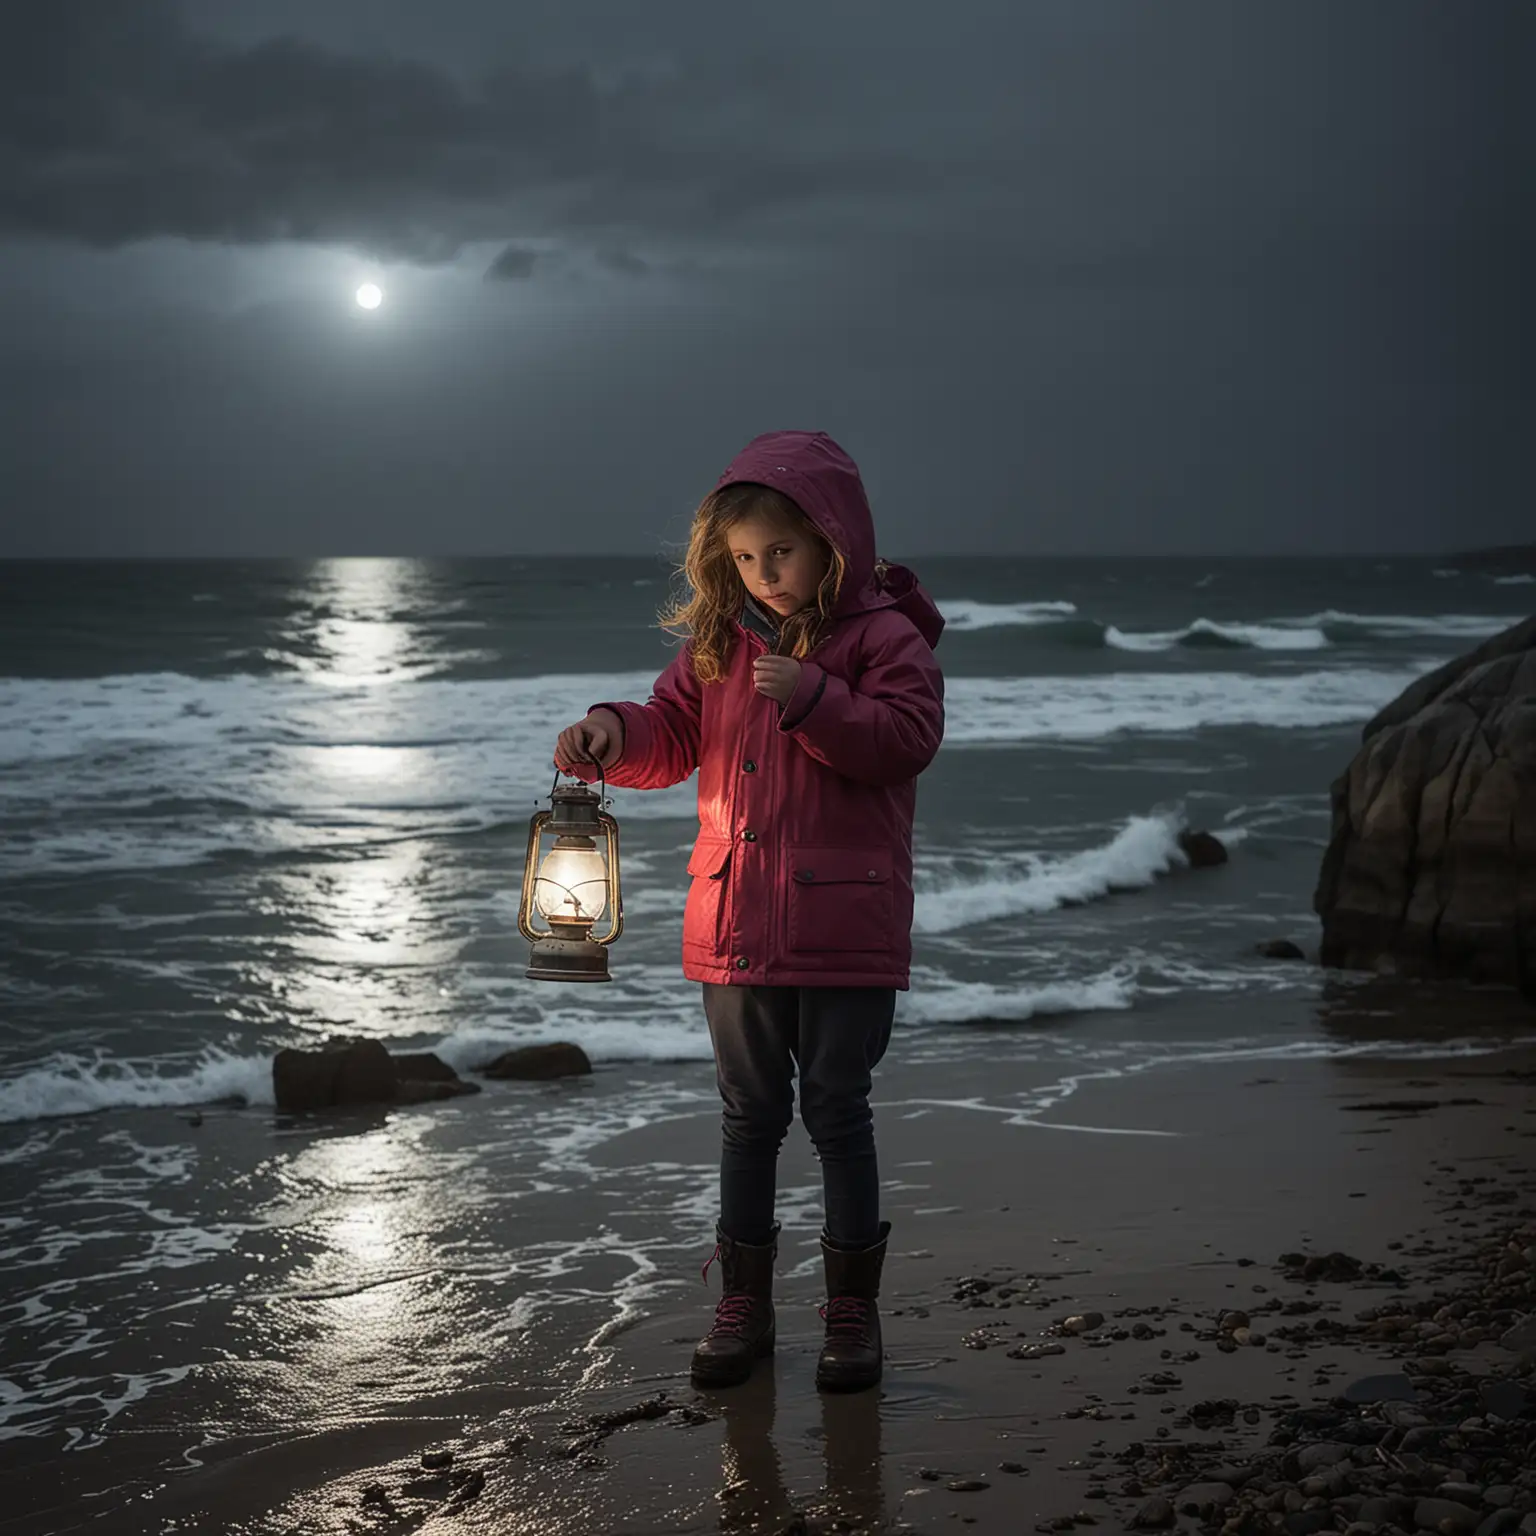 Nighttime Lantern Signal by Little Girl on Finistre Coast